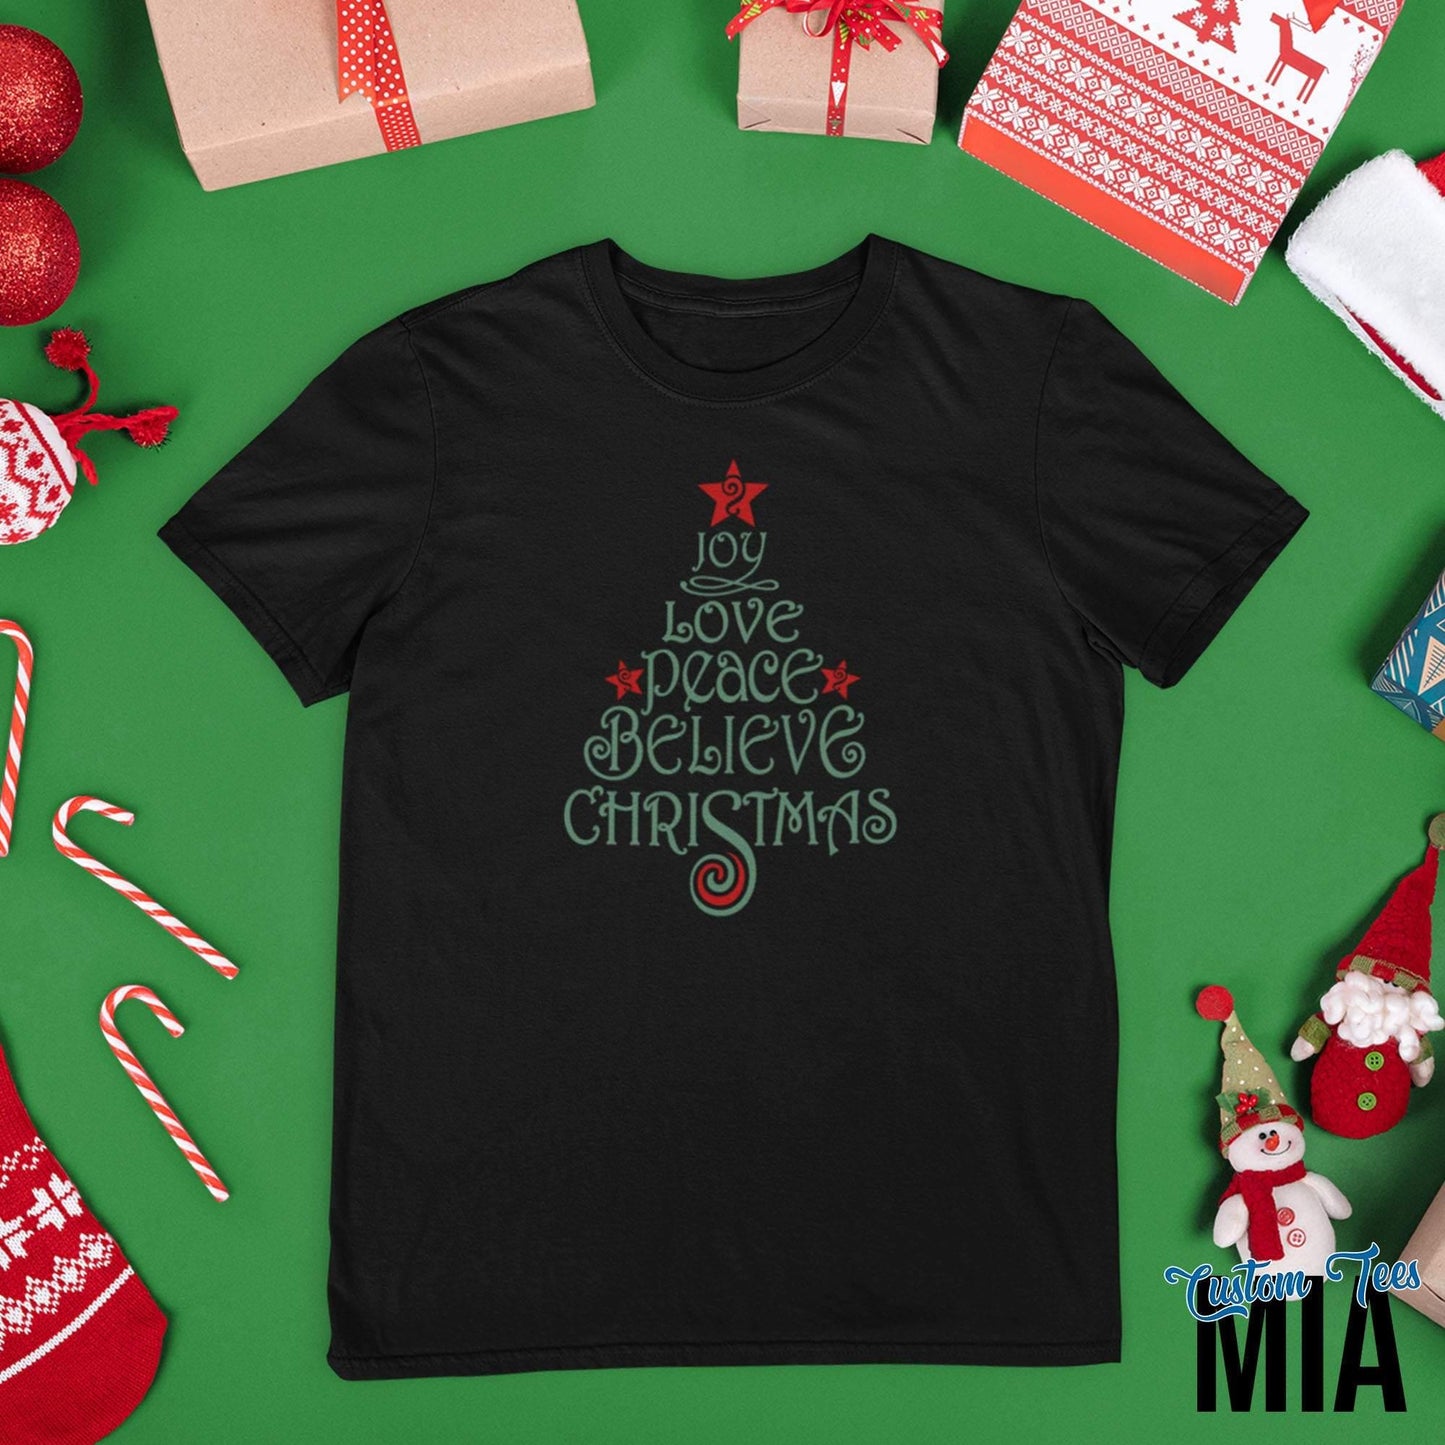 Christmas Tree Shirt - Custom Tees MIA